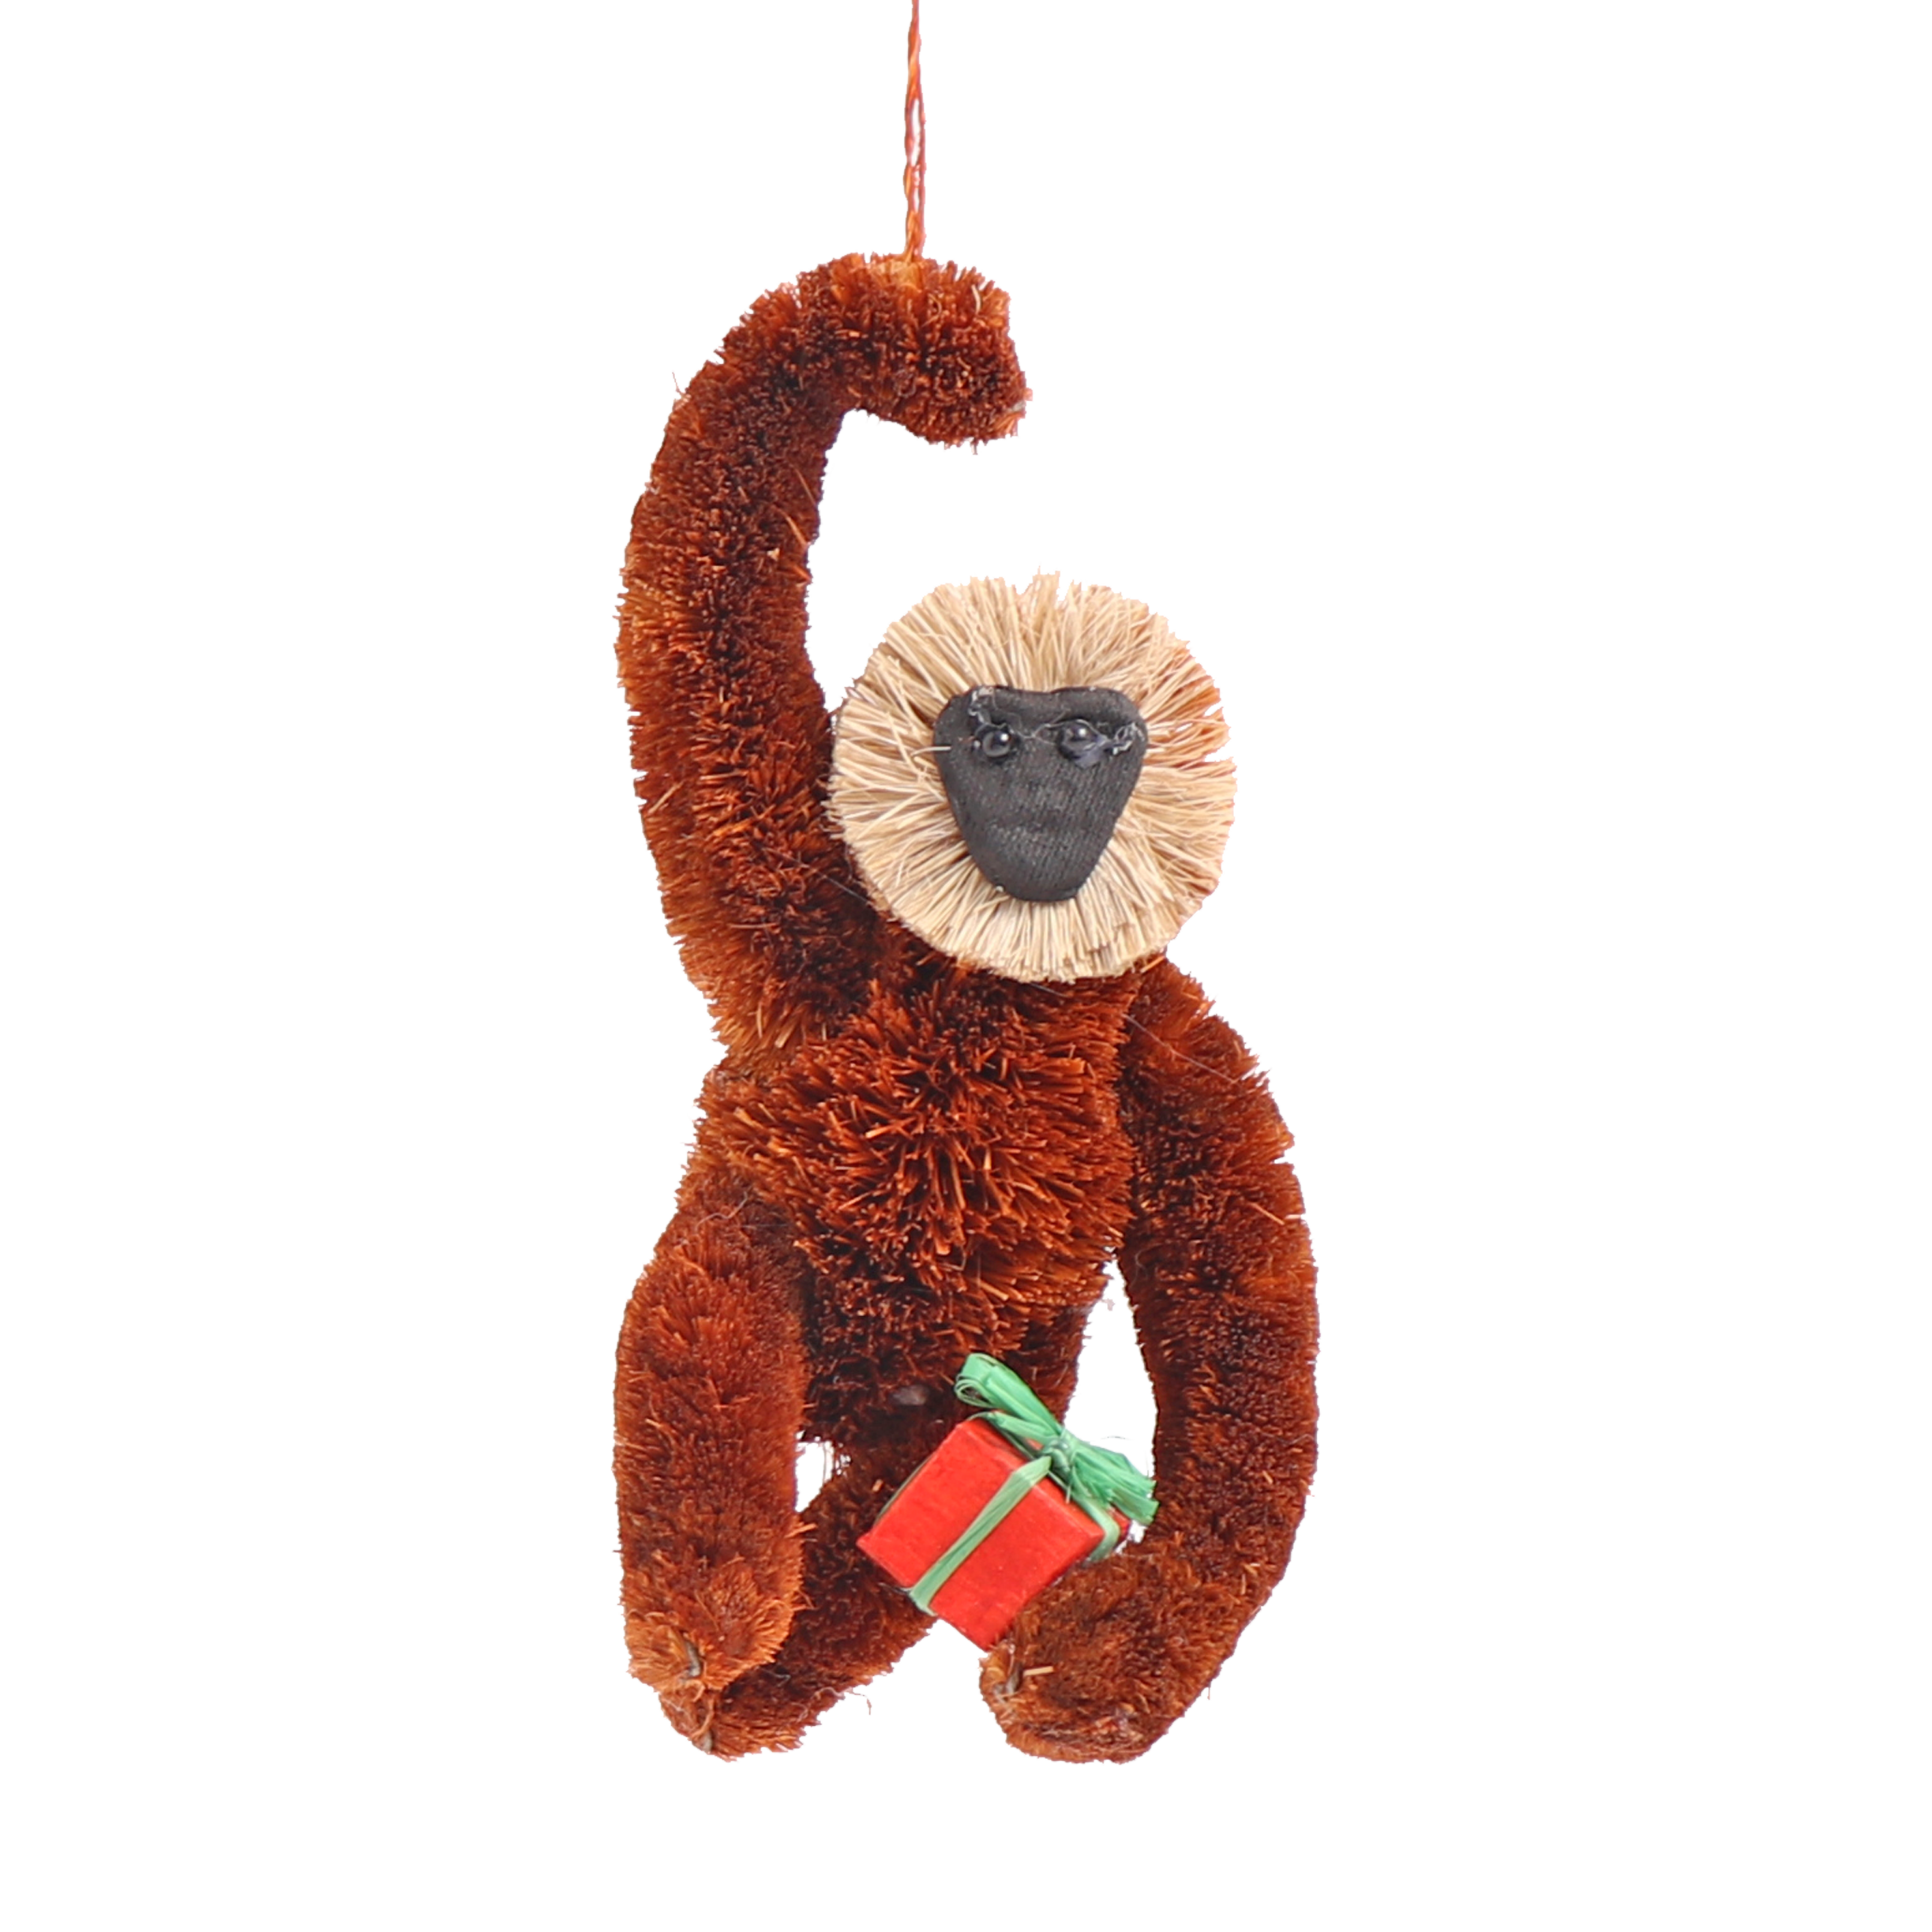 Bristle Monkey Decoration, 12cm